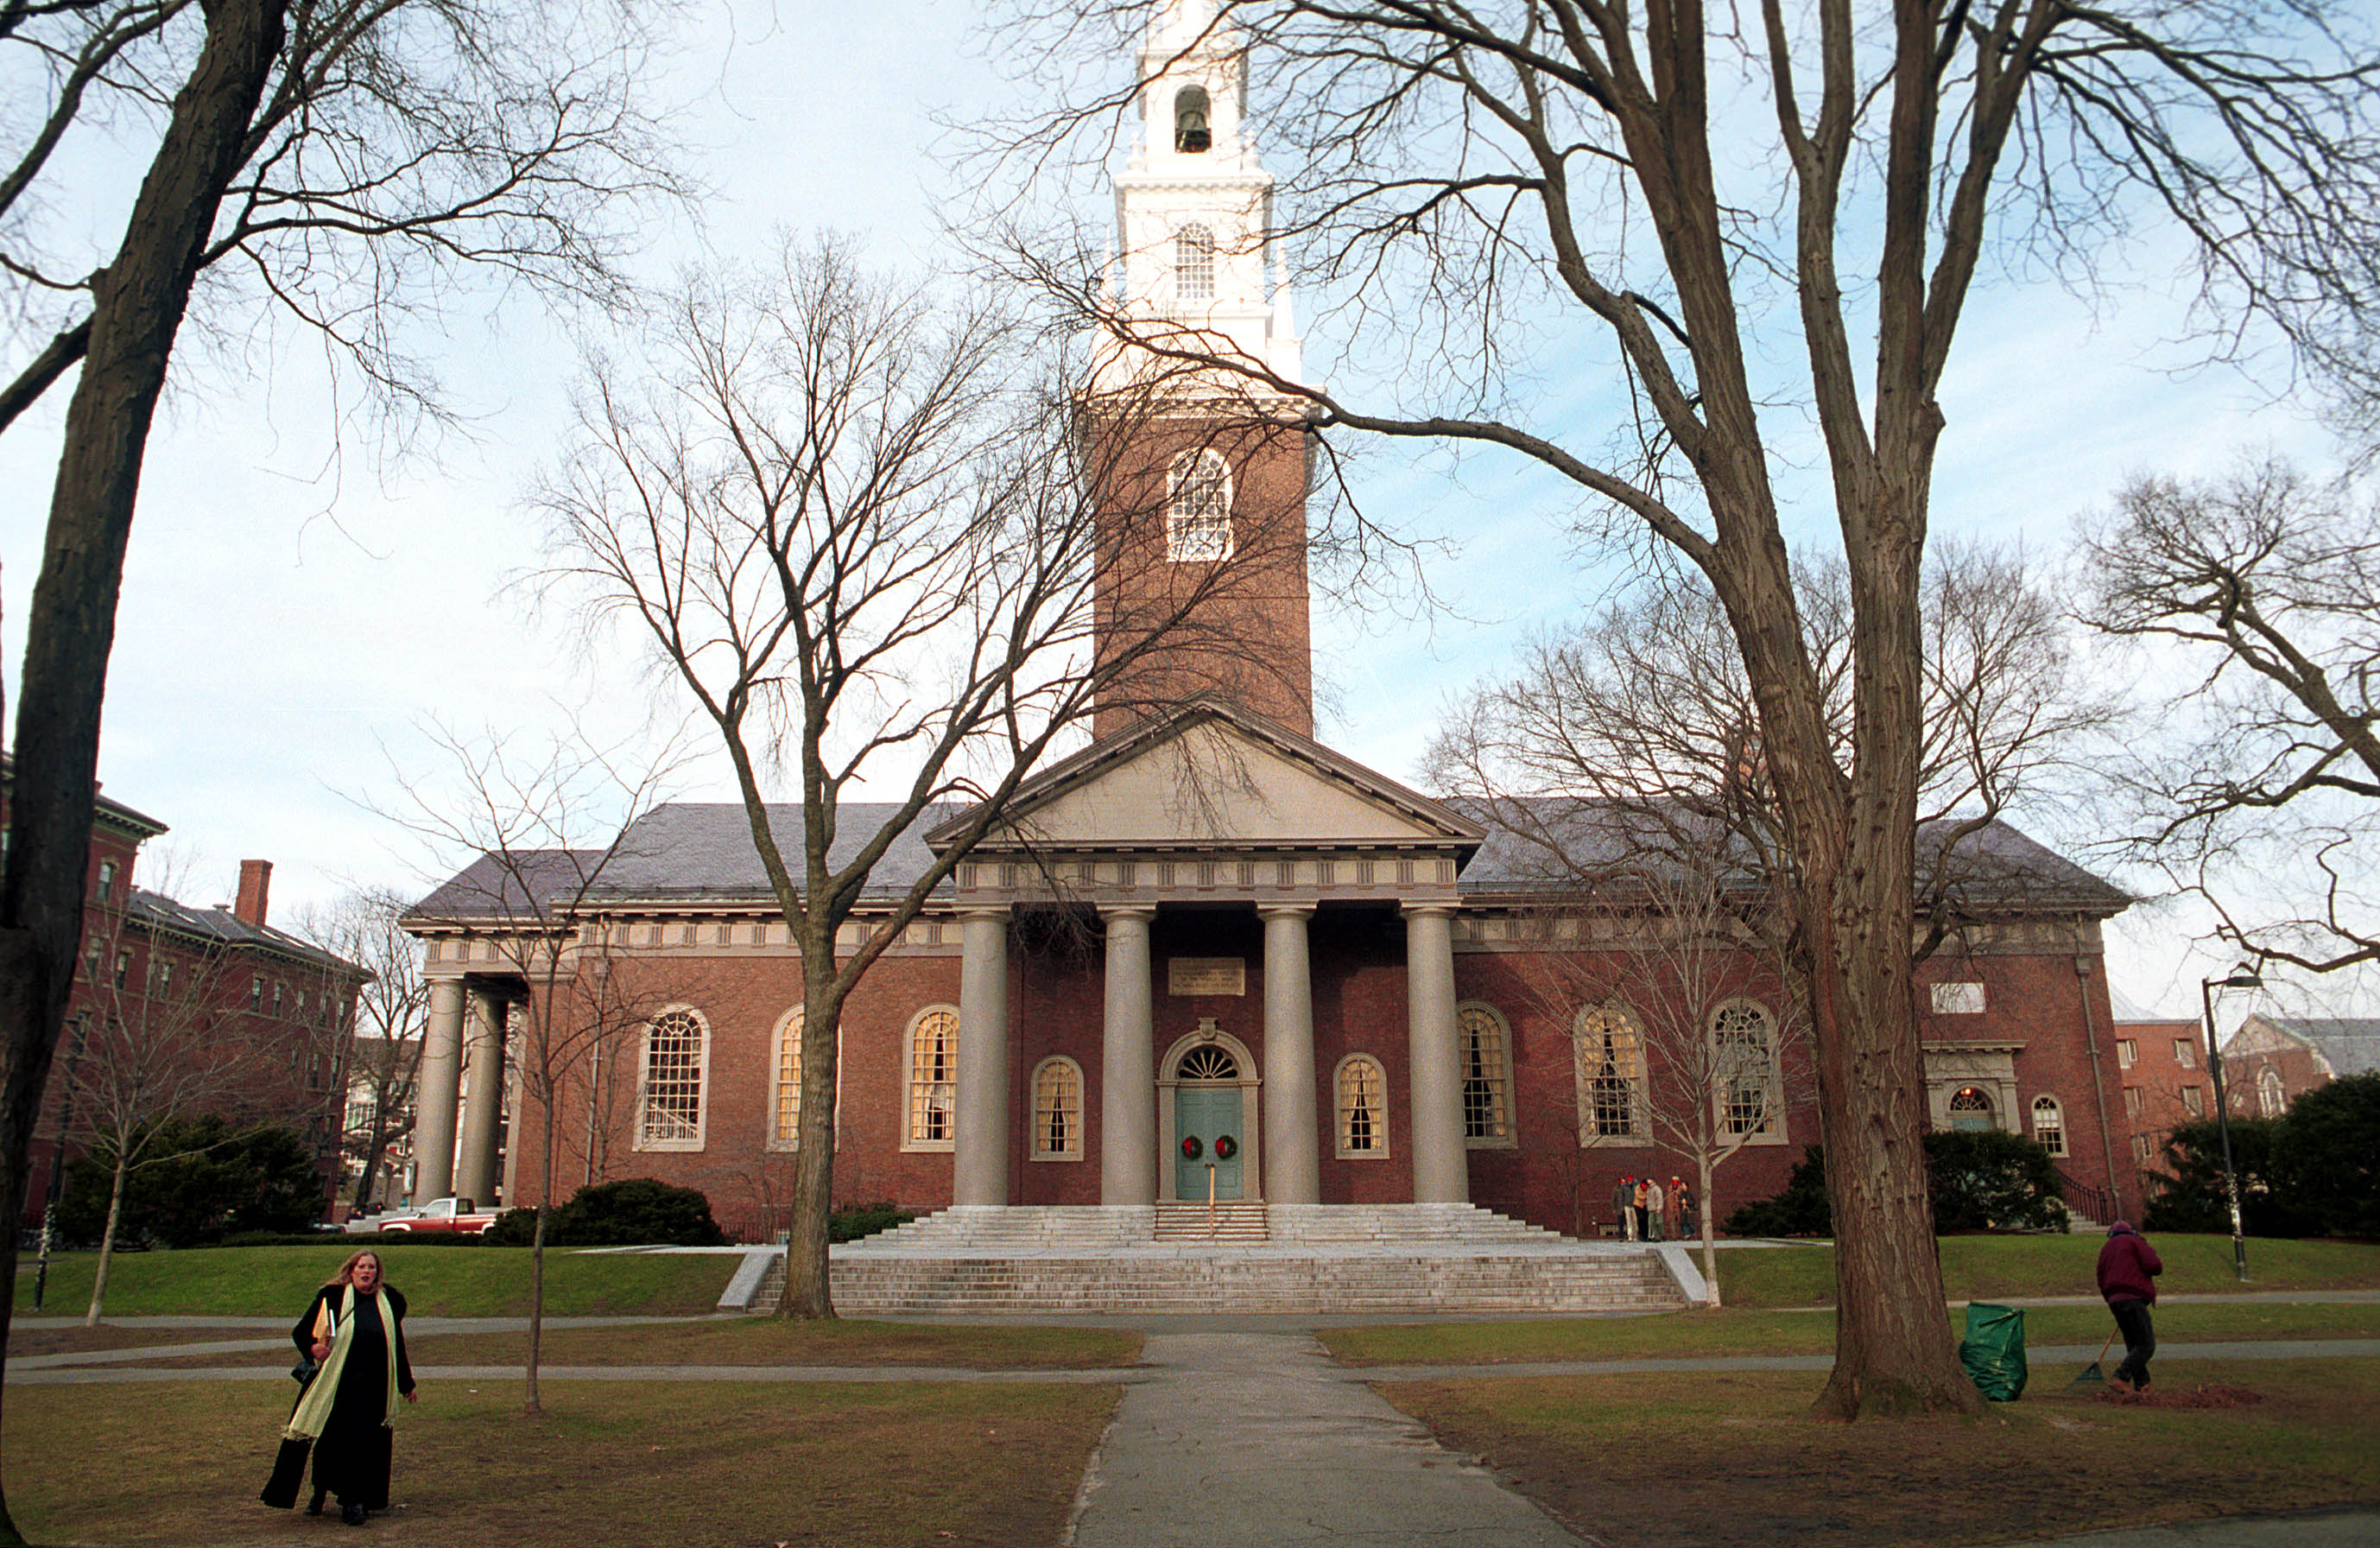 The Harvard University campus.